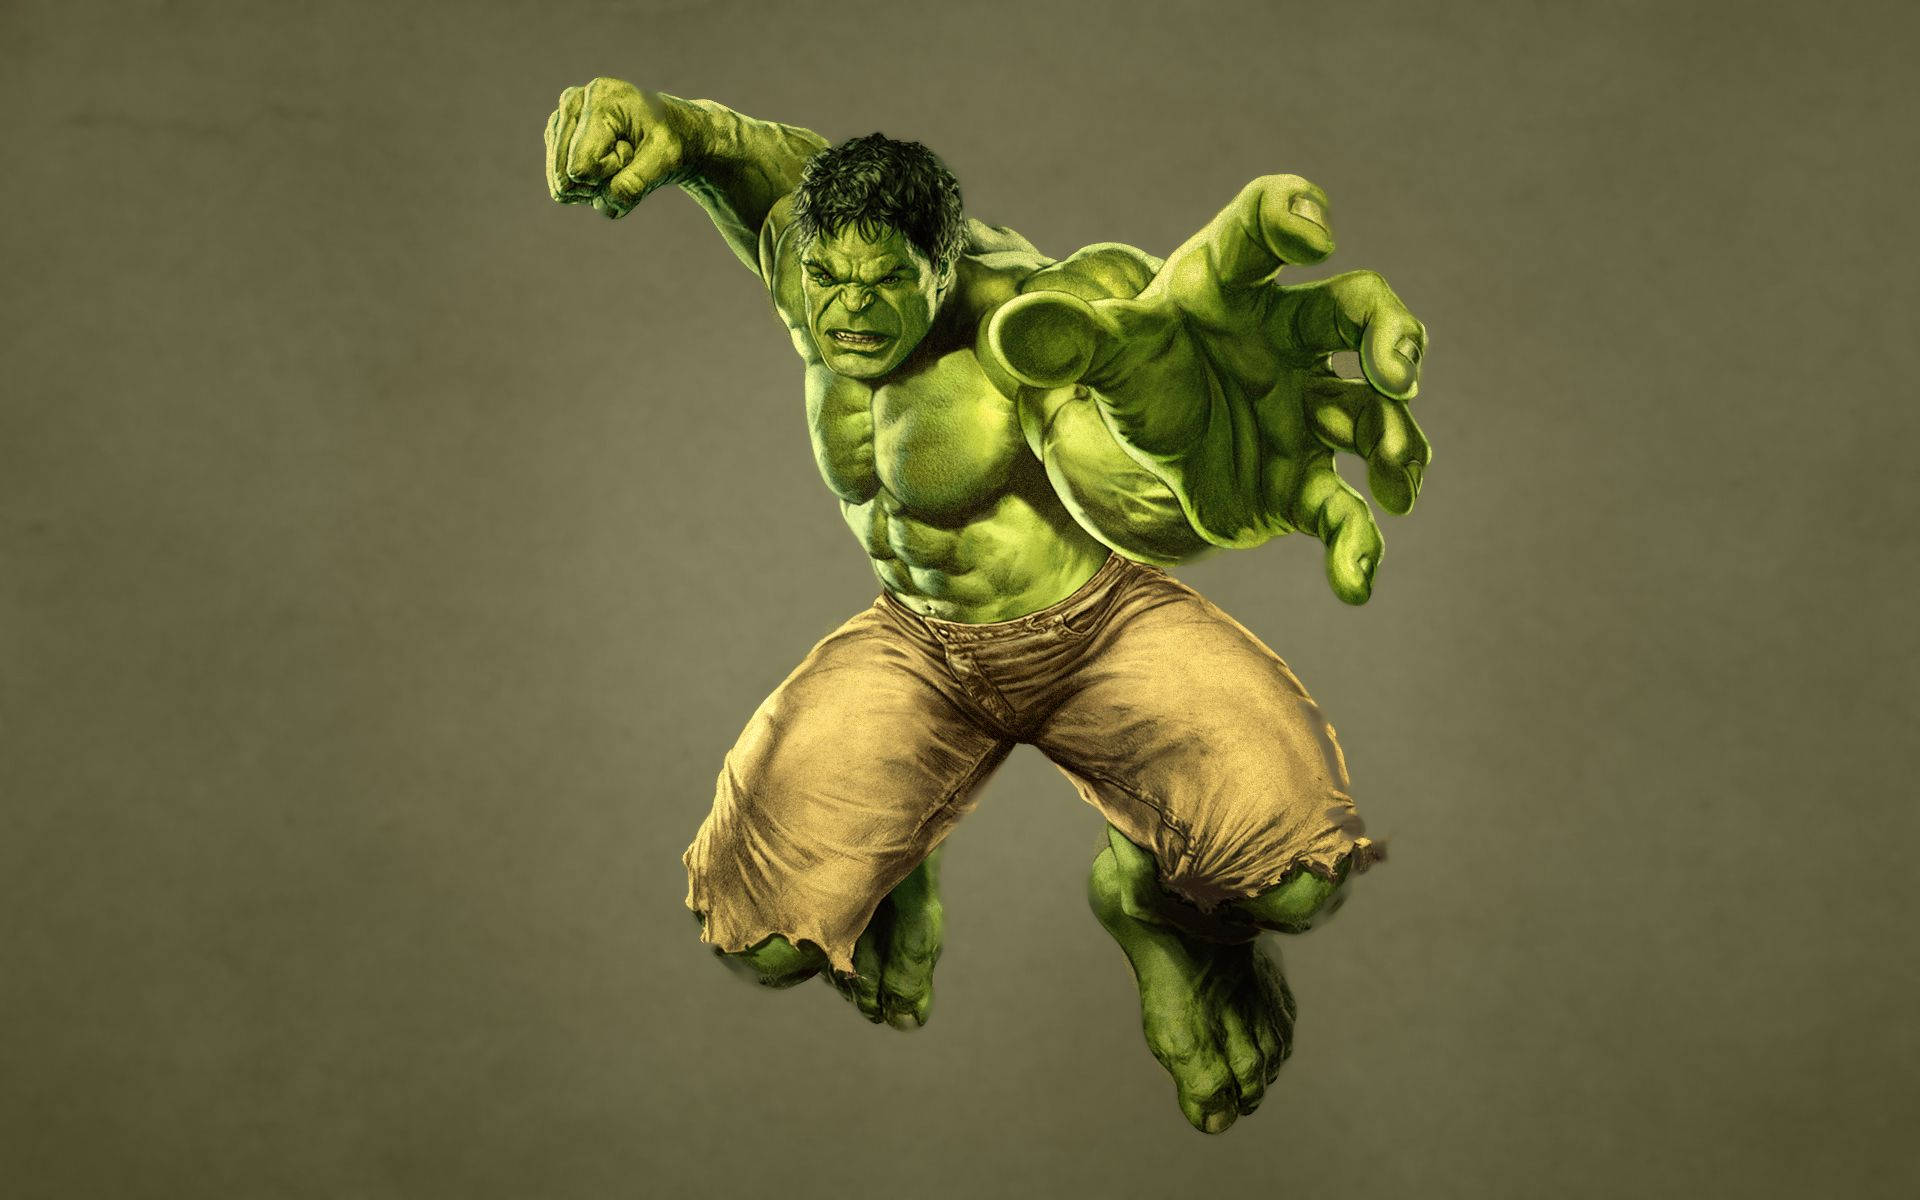 Punching And Leaping Hulk